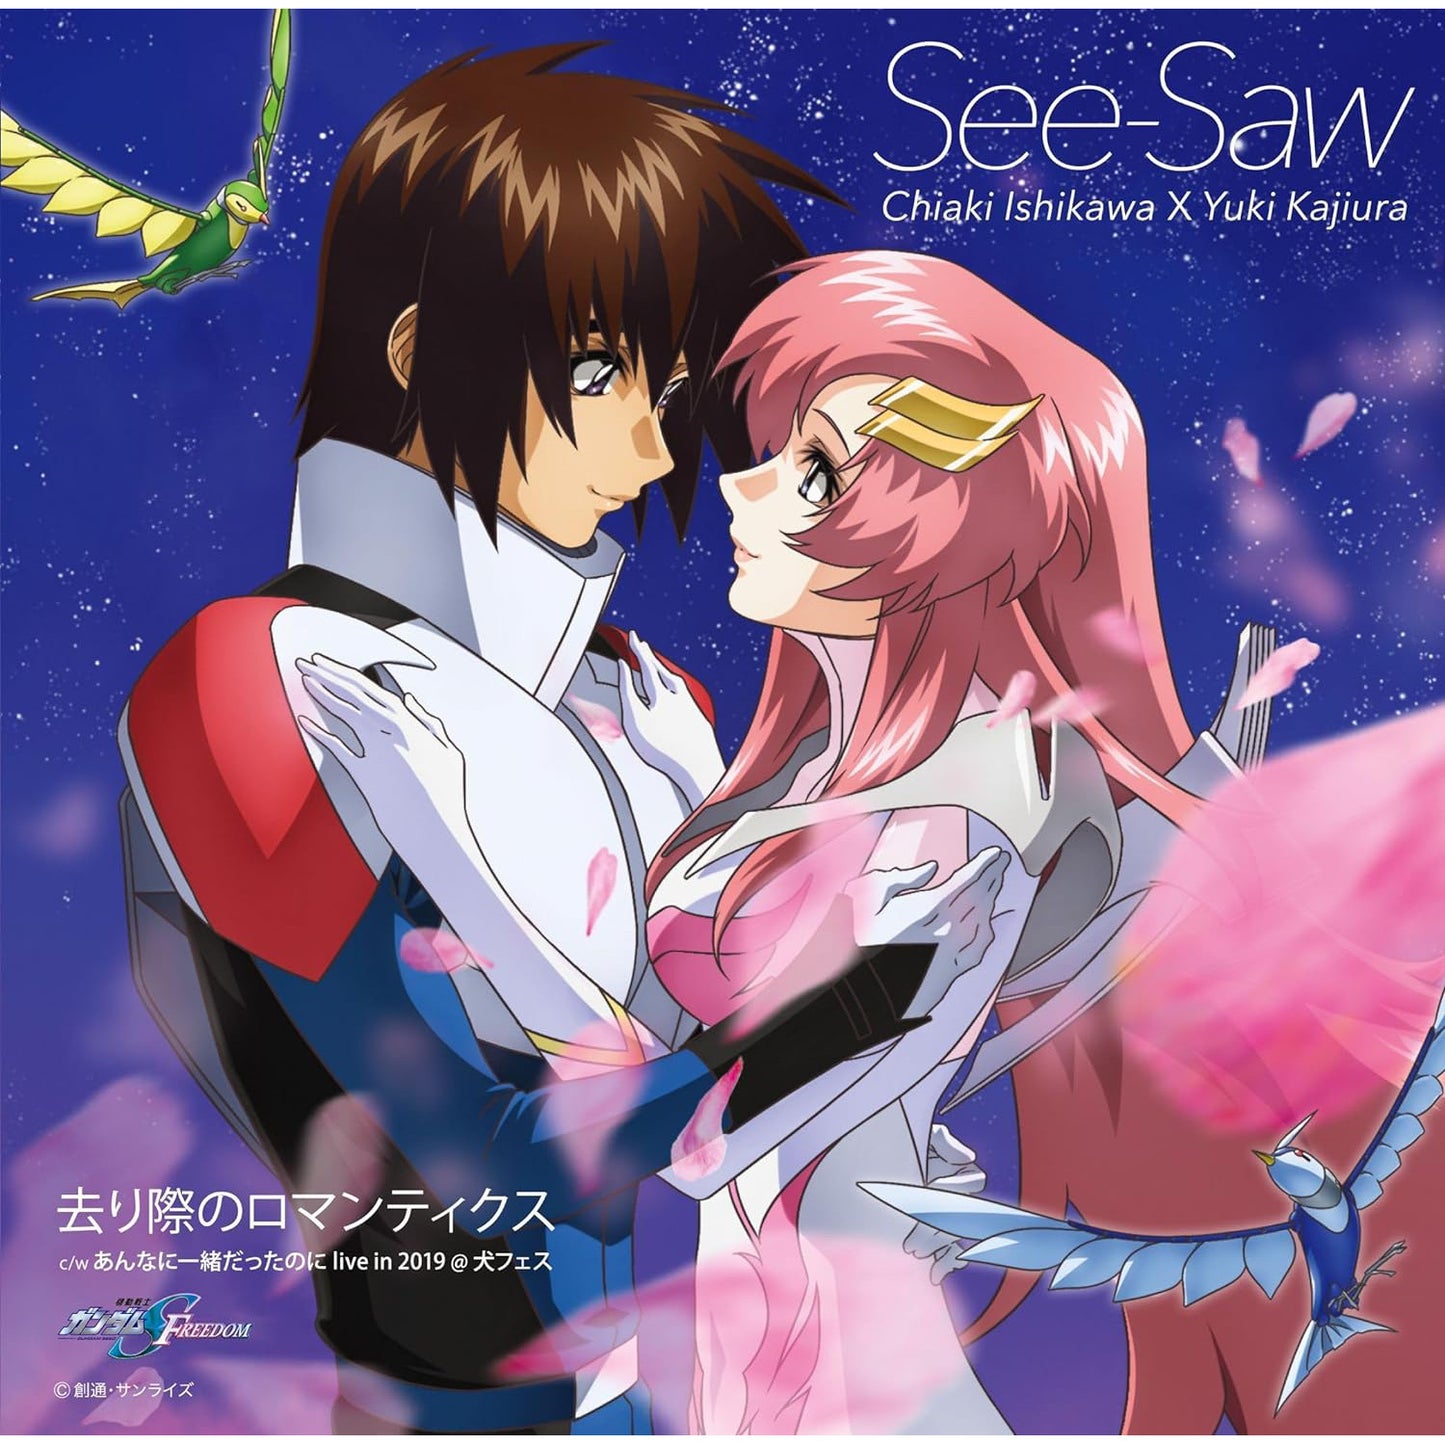 See-Saw 單曲CD《去り際のロマンティクス》劇場版「機動戰士Gundam SEED FREEDOM」片尾曲 <CD>